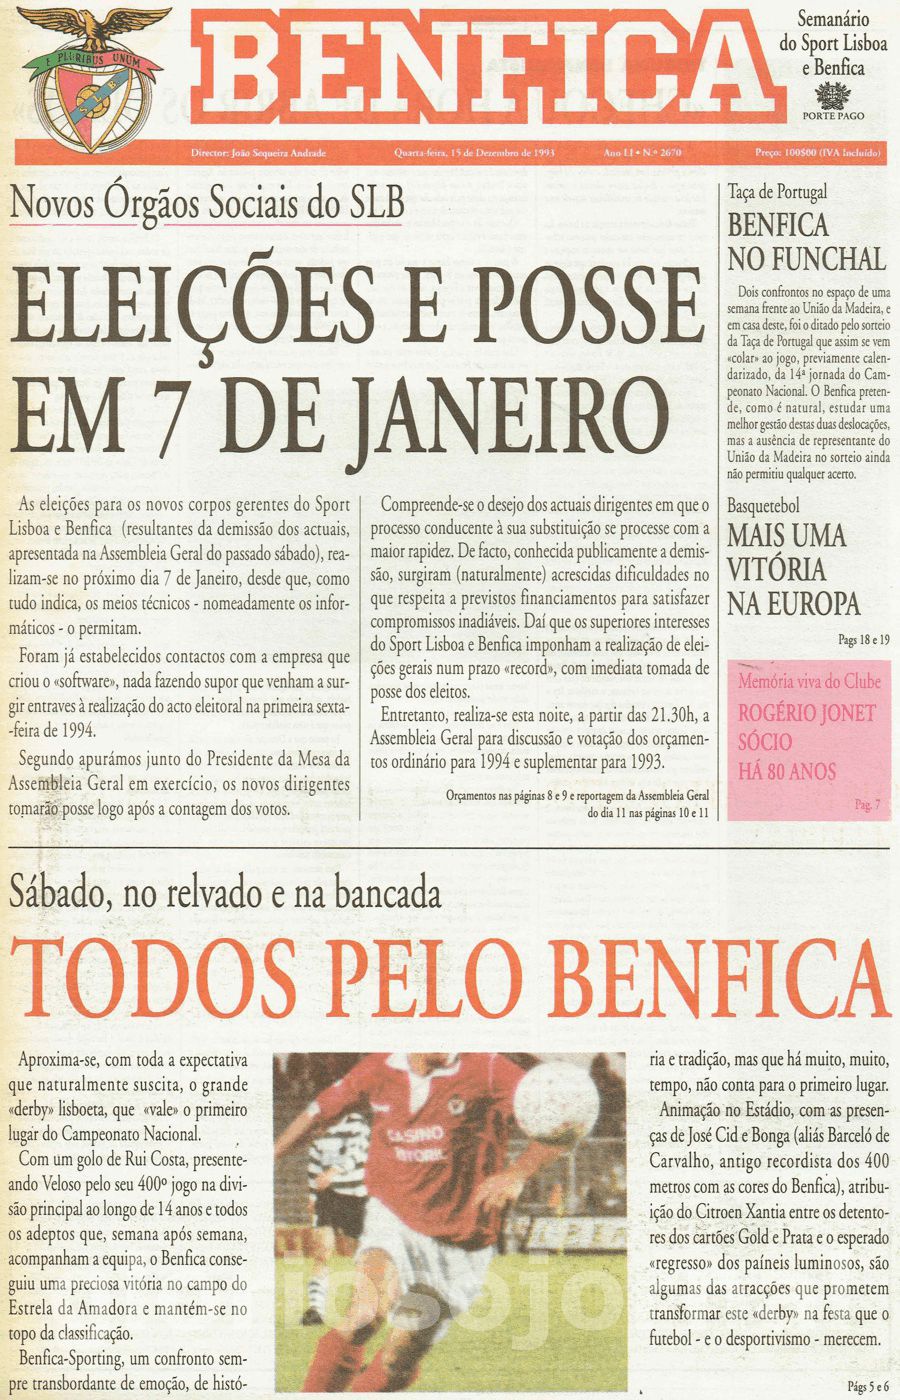 jornal o benfica 2670 1993-12-15